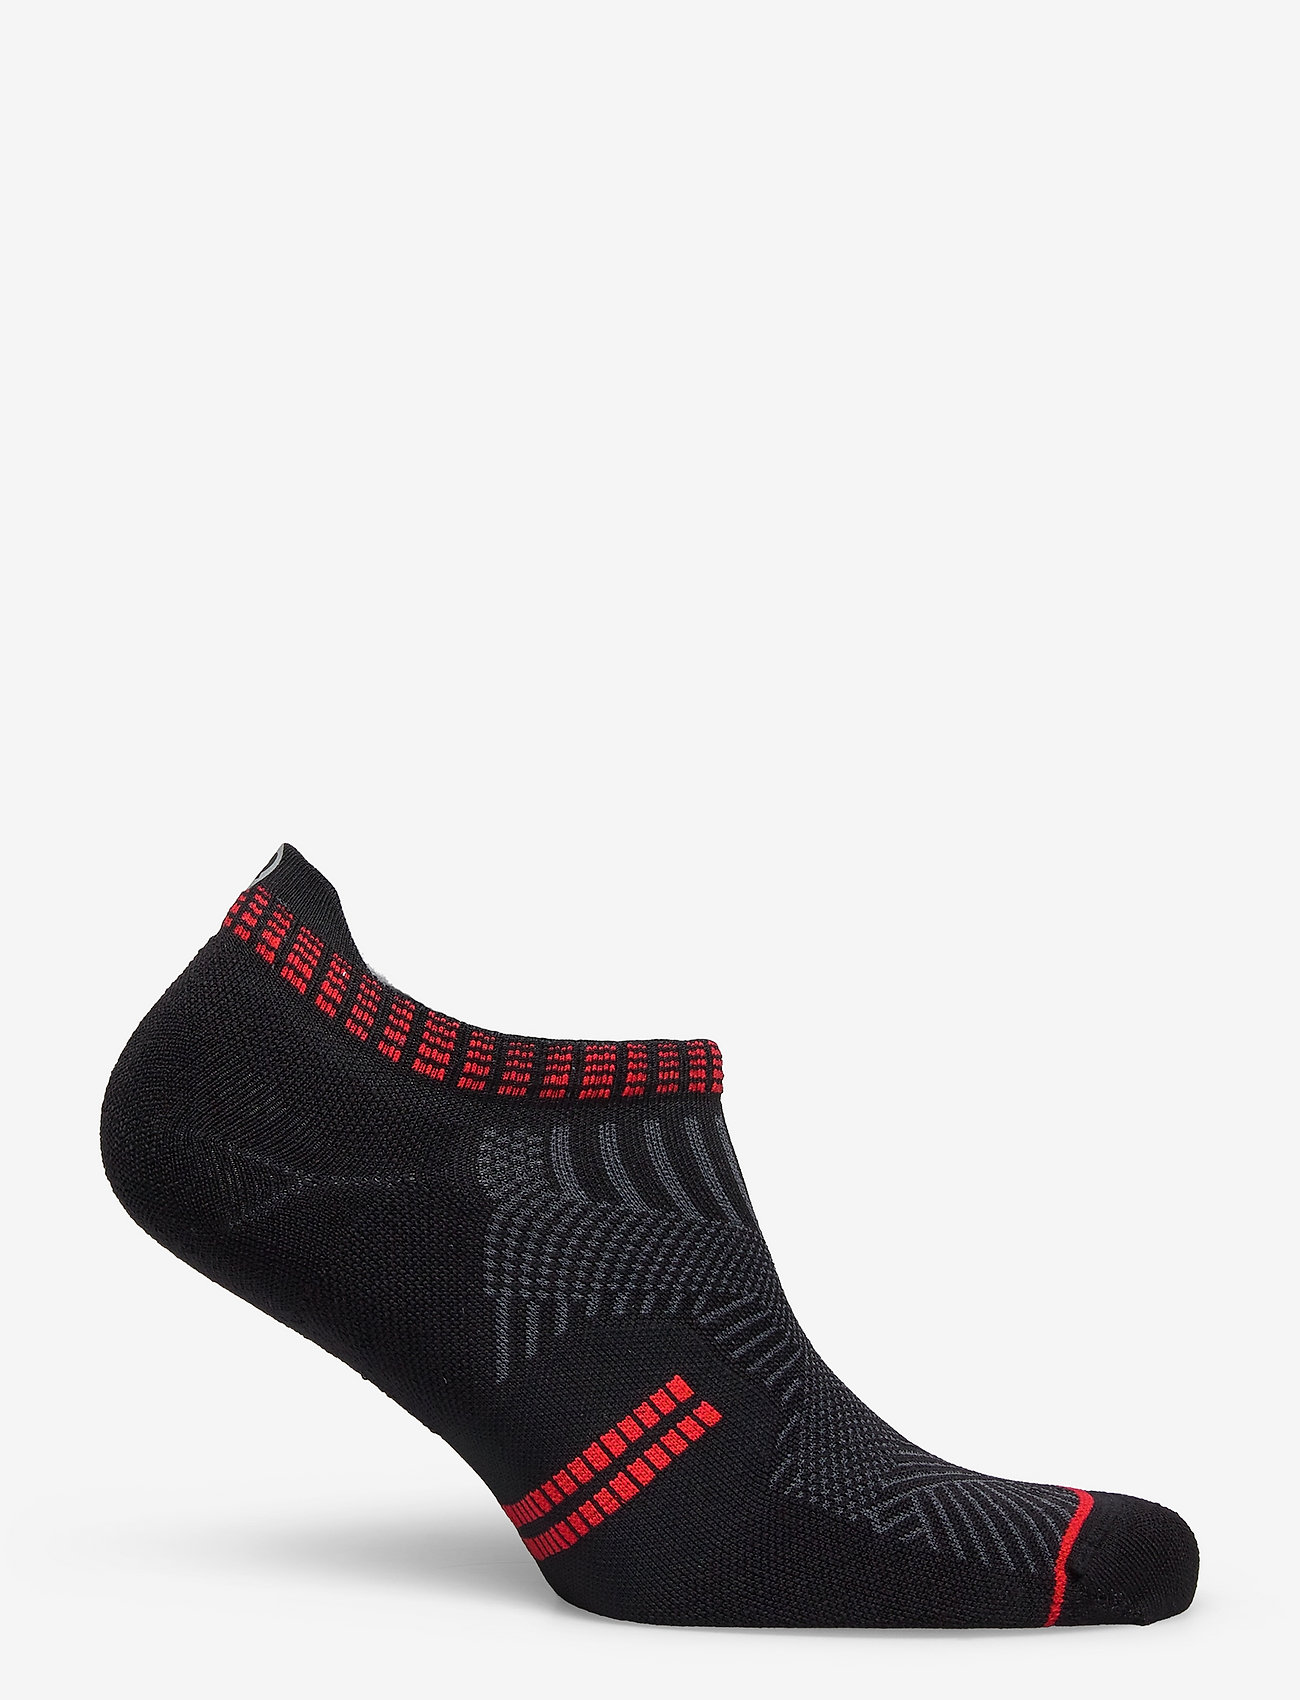 Rockay - Accelerate Performance Socks - black/red - 1